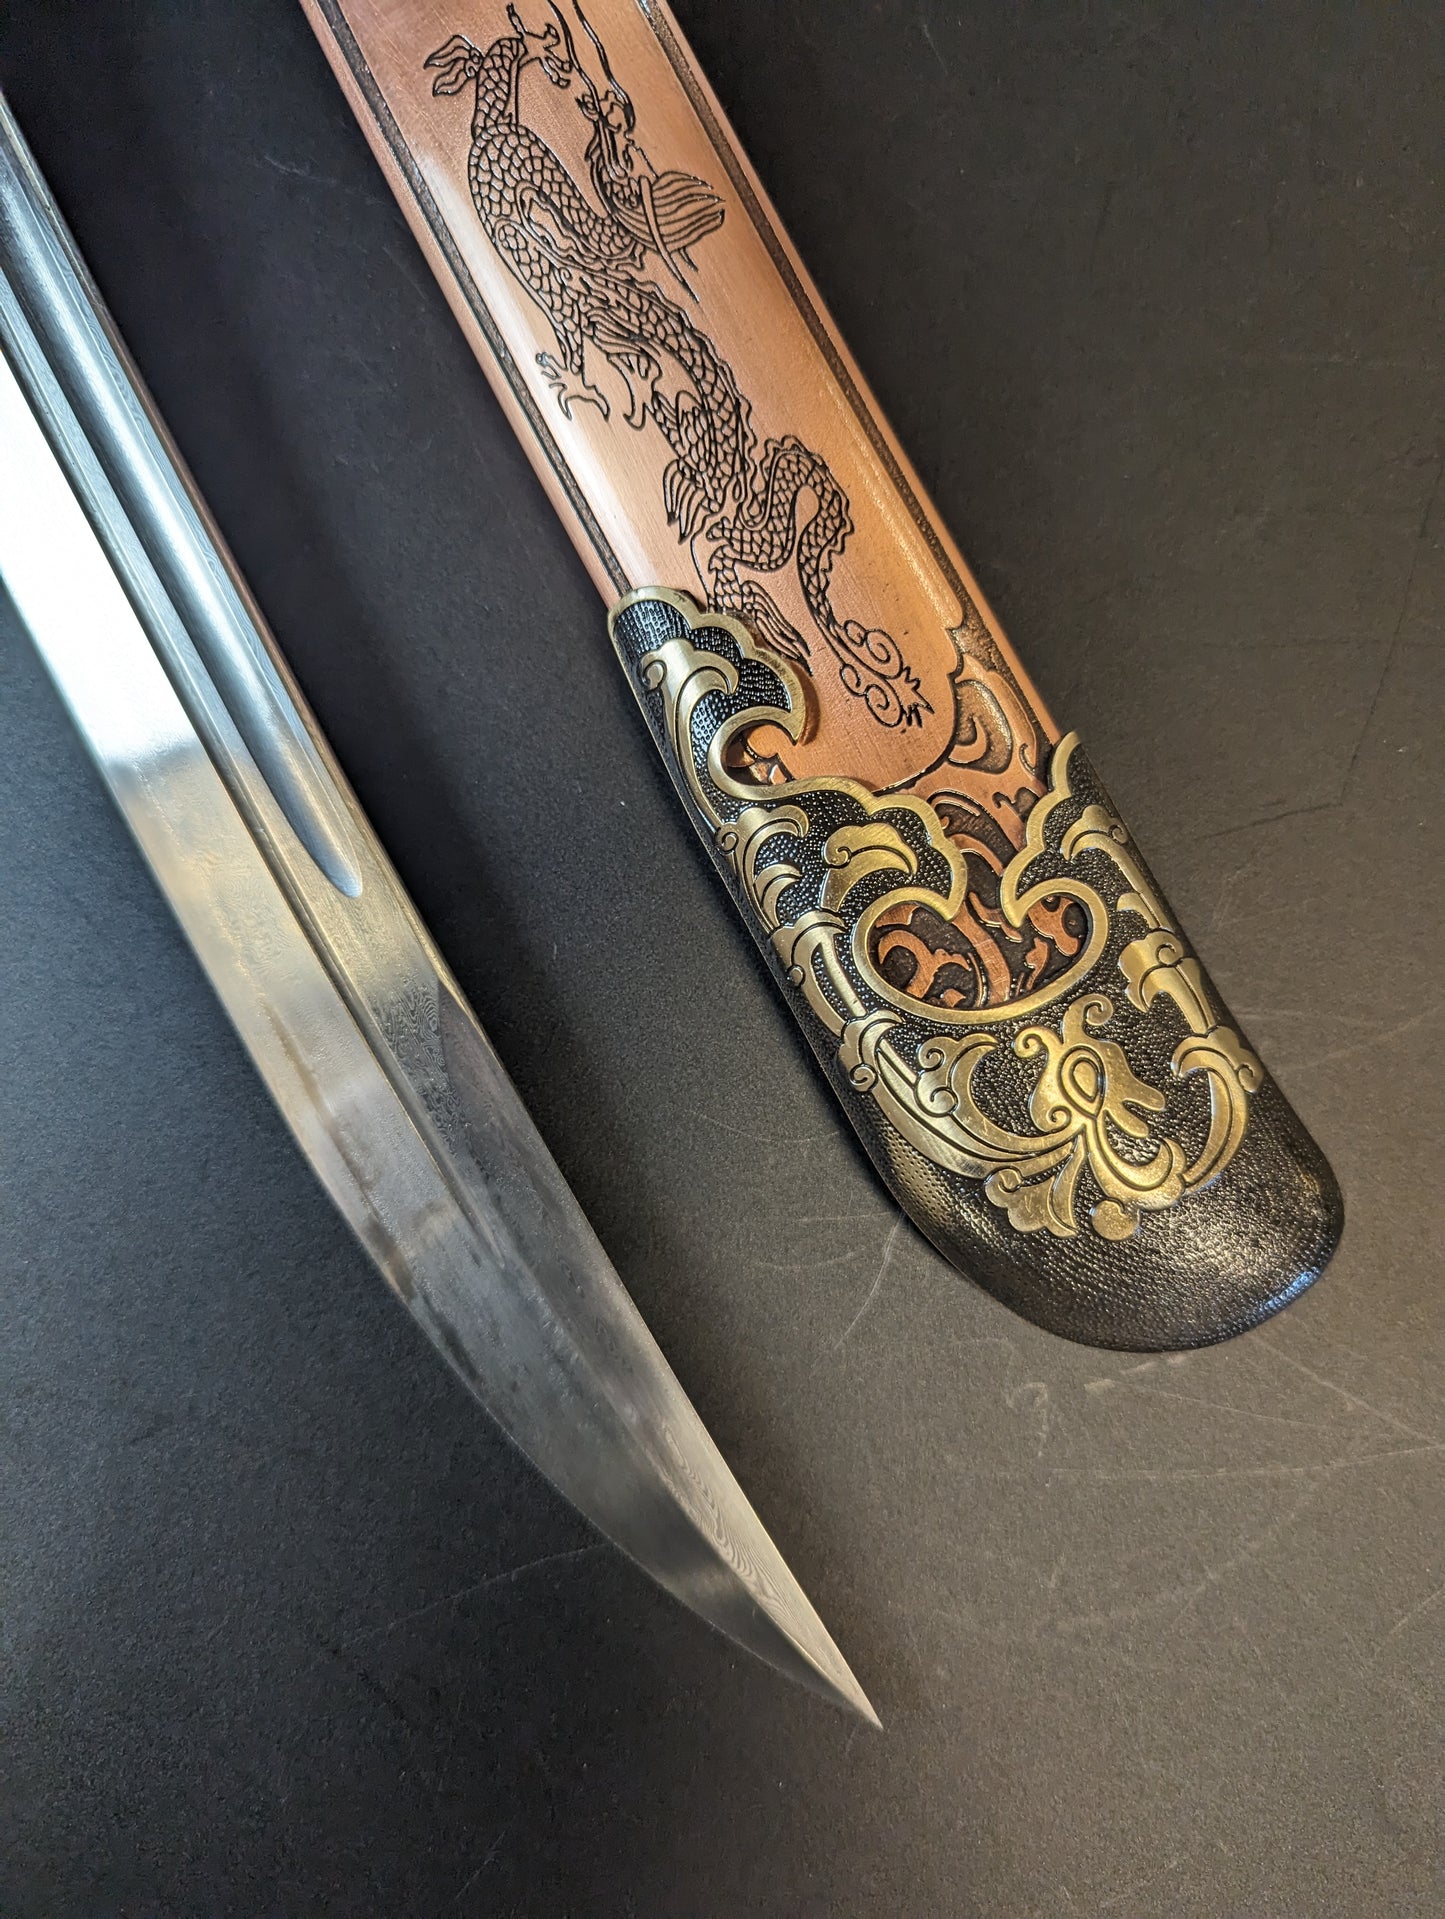 Ming Dao - Damascus Blade, copper scabbard